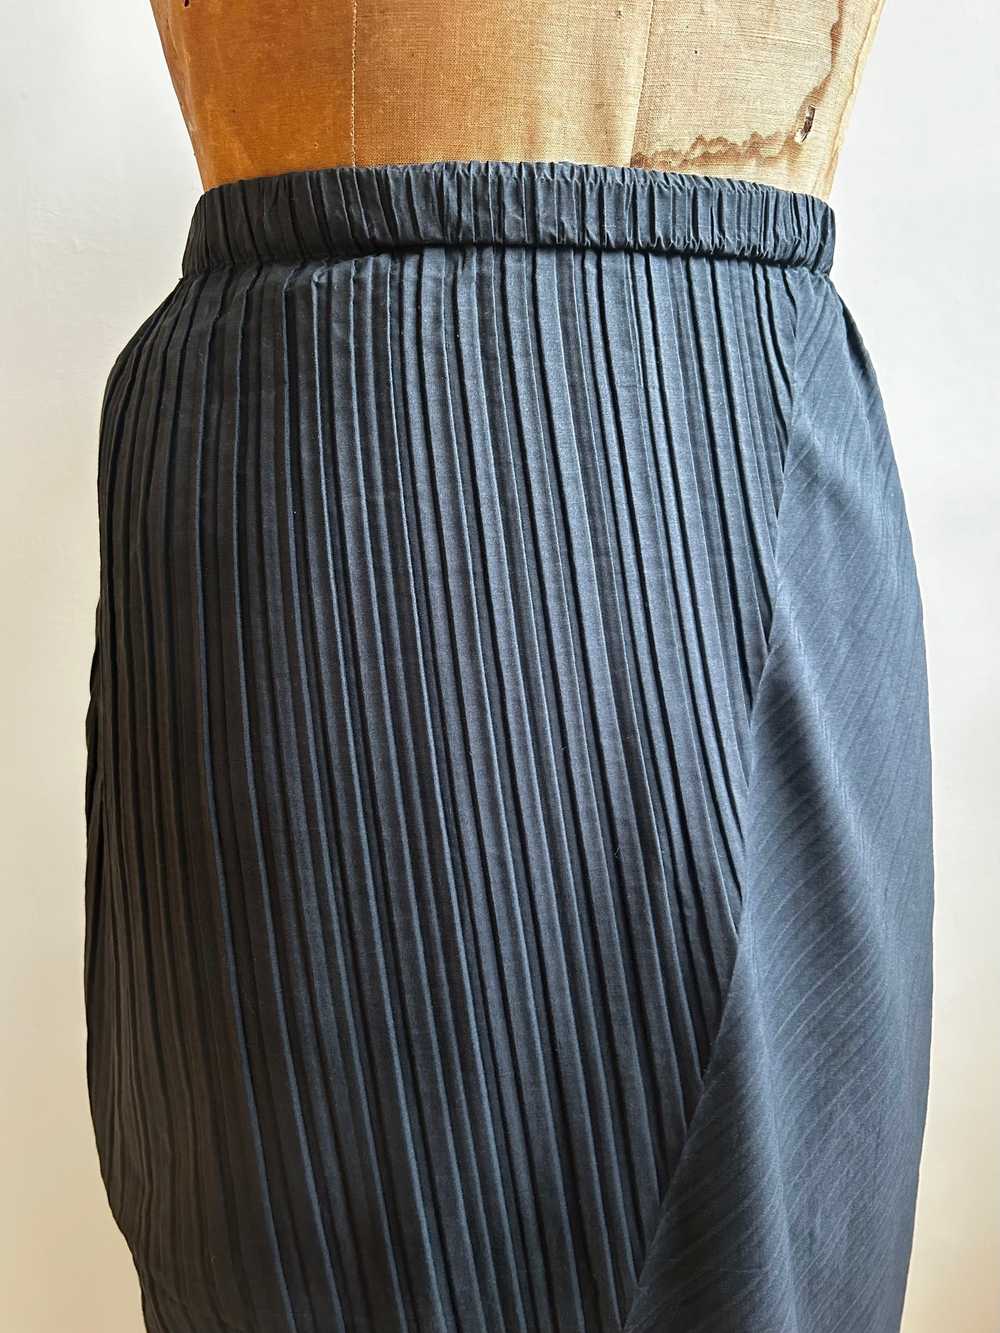 Vintage Issey Miyake Pleated Black Skirt Size Sma… - image 4